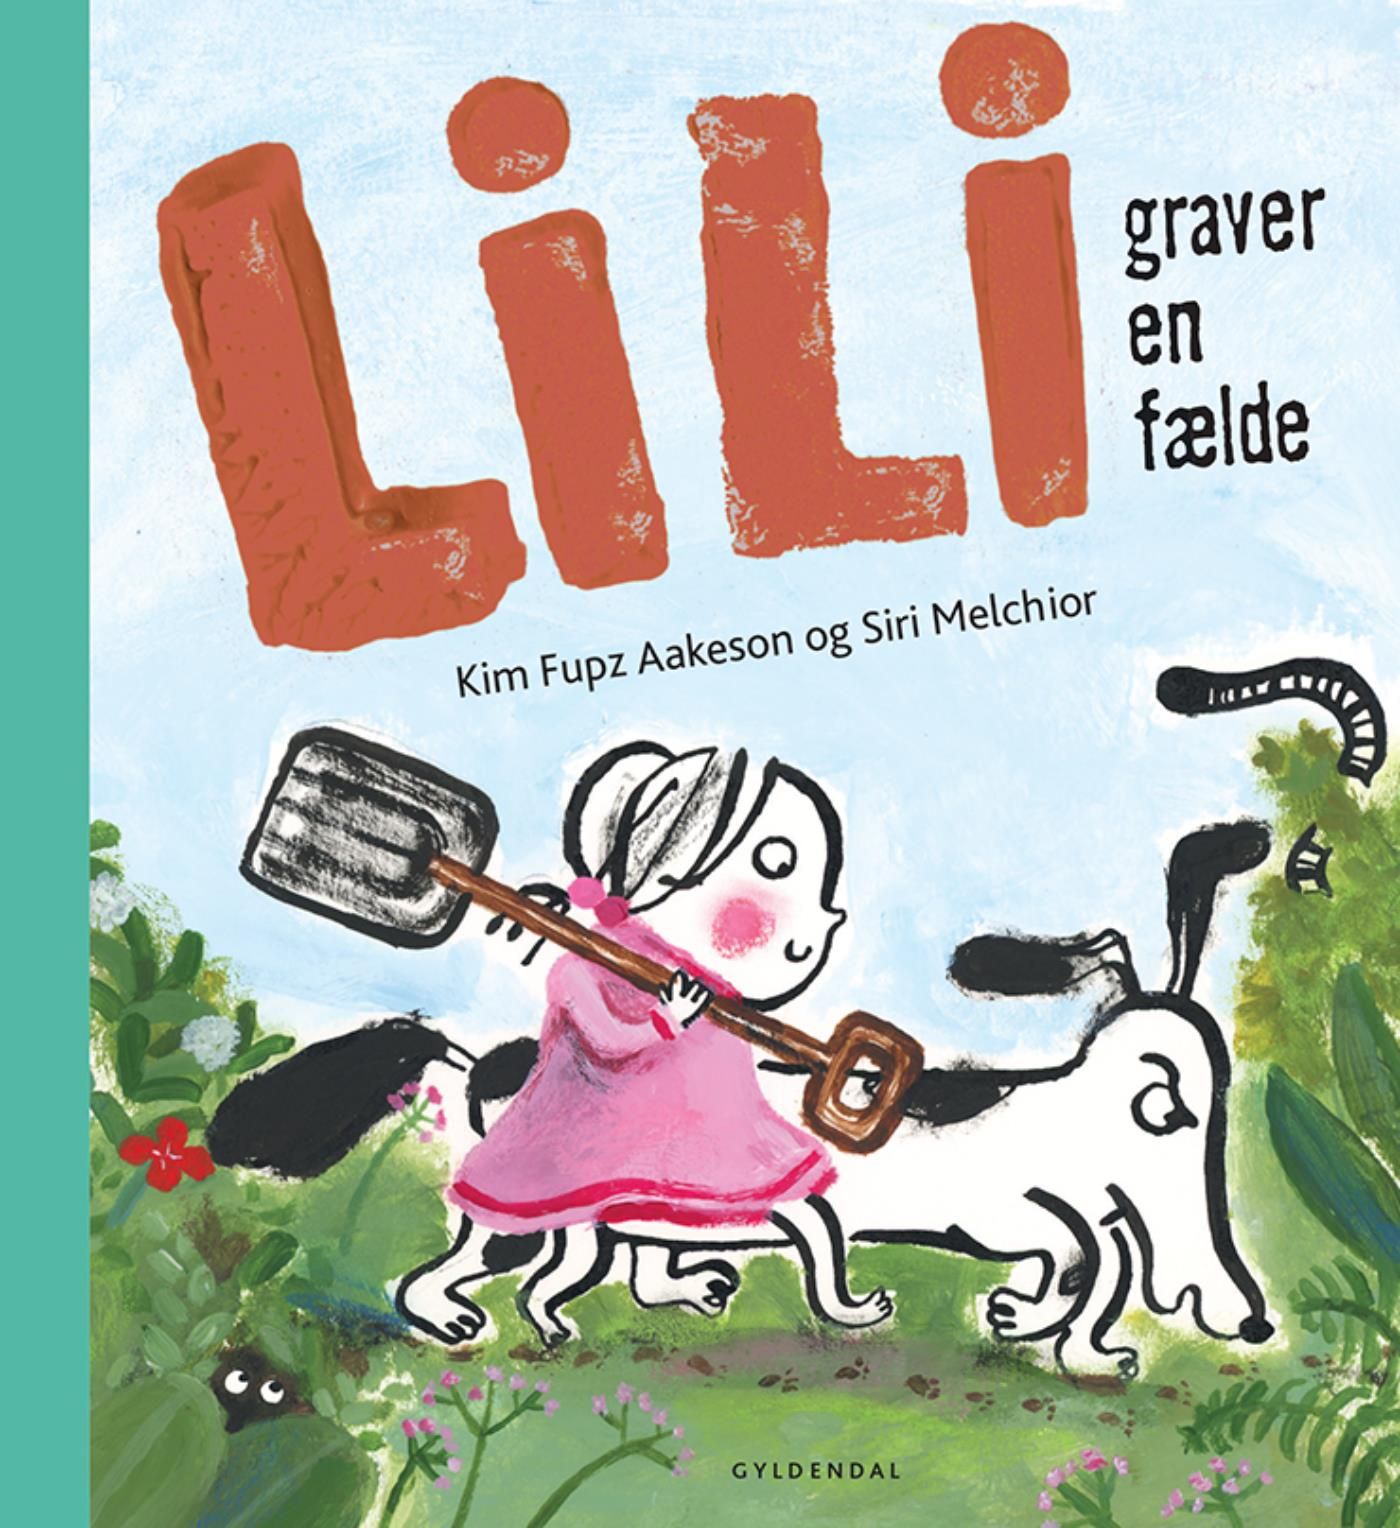 Lili graver en fælde - Lyt&læs, eBook by Siri Melchior, Kim Fupz Aakeson